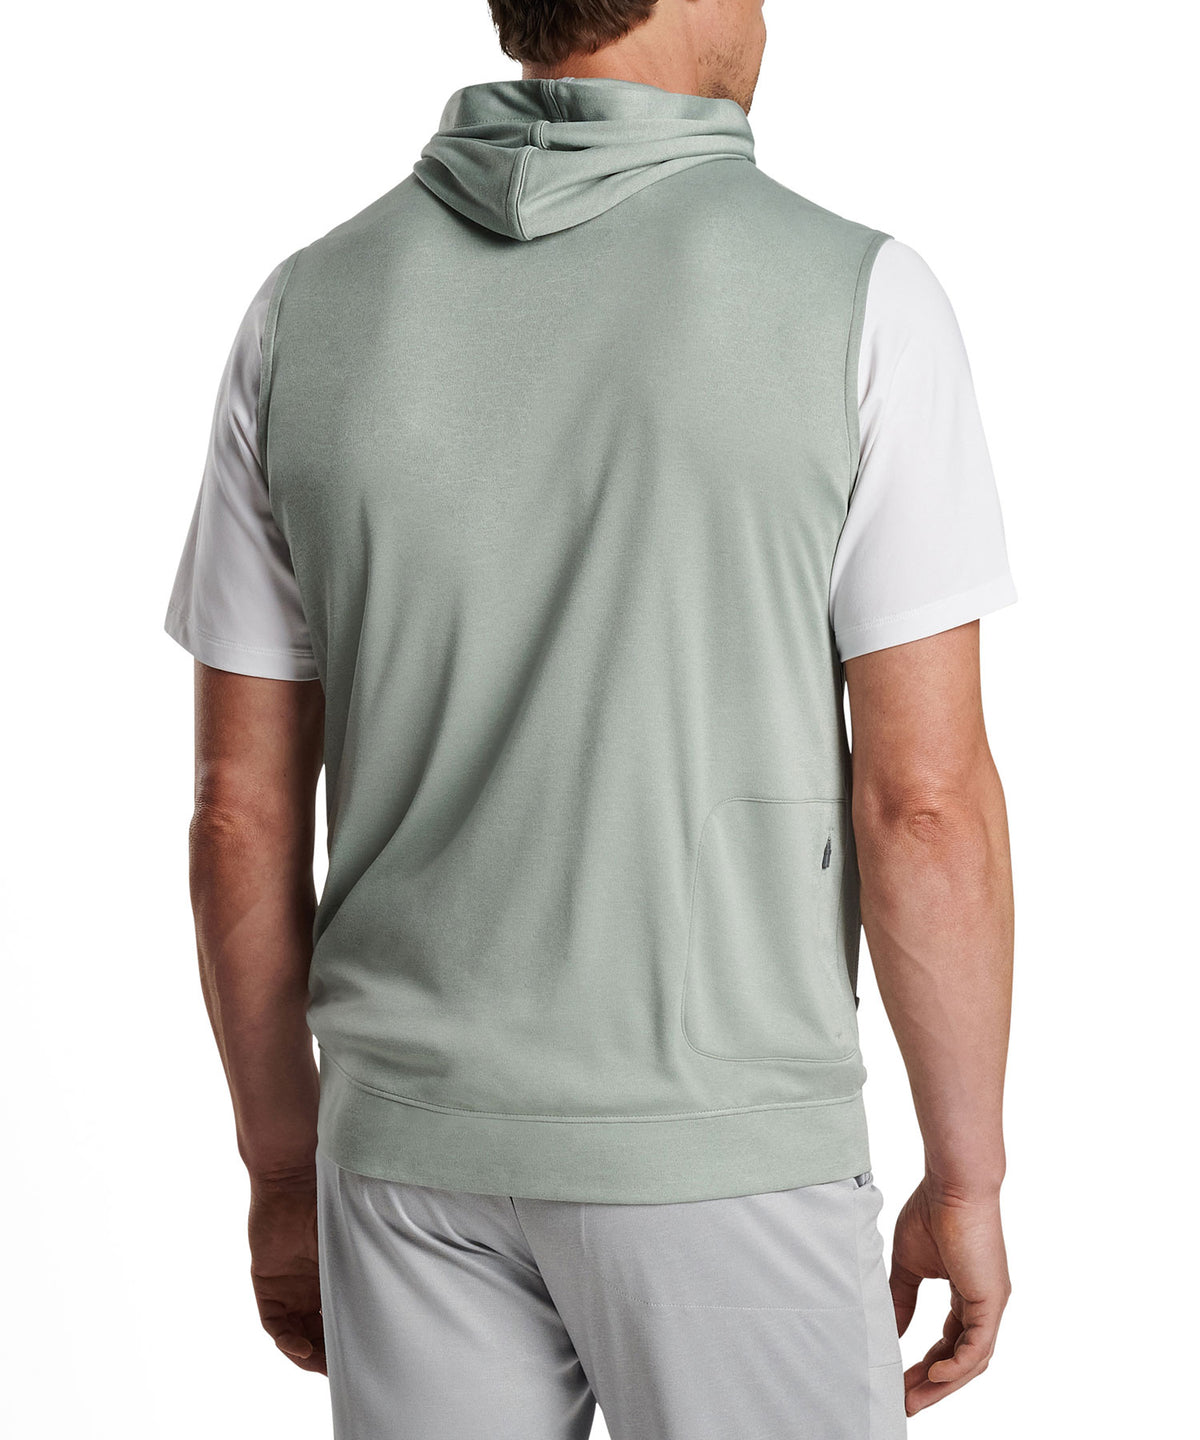 Peter Millar Cloudglow Hoodie Vest, Big & Tall